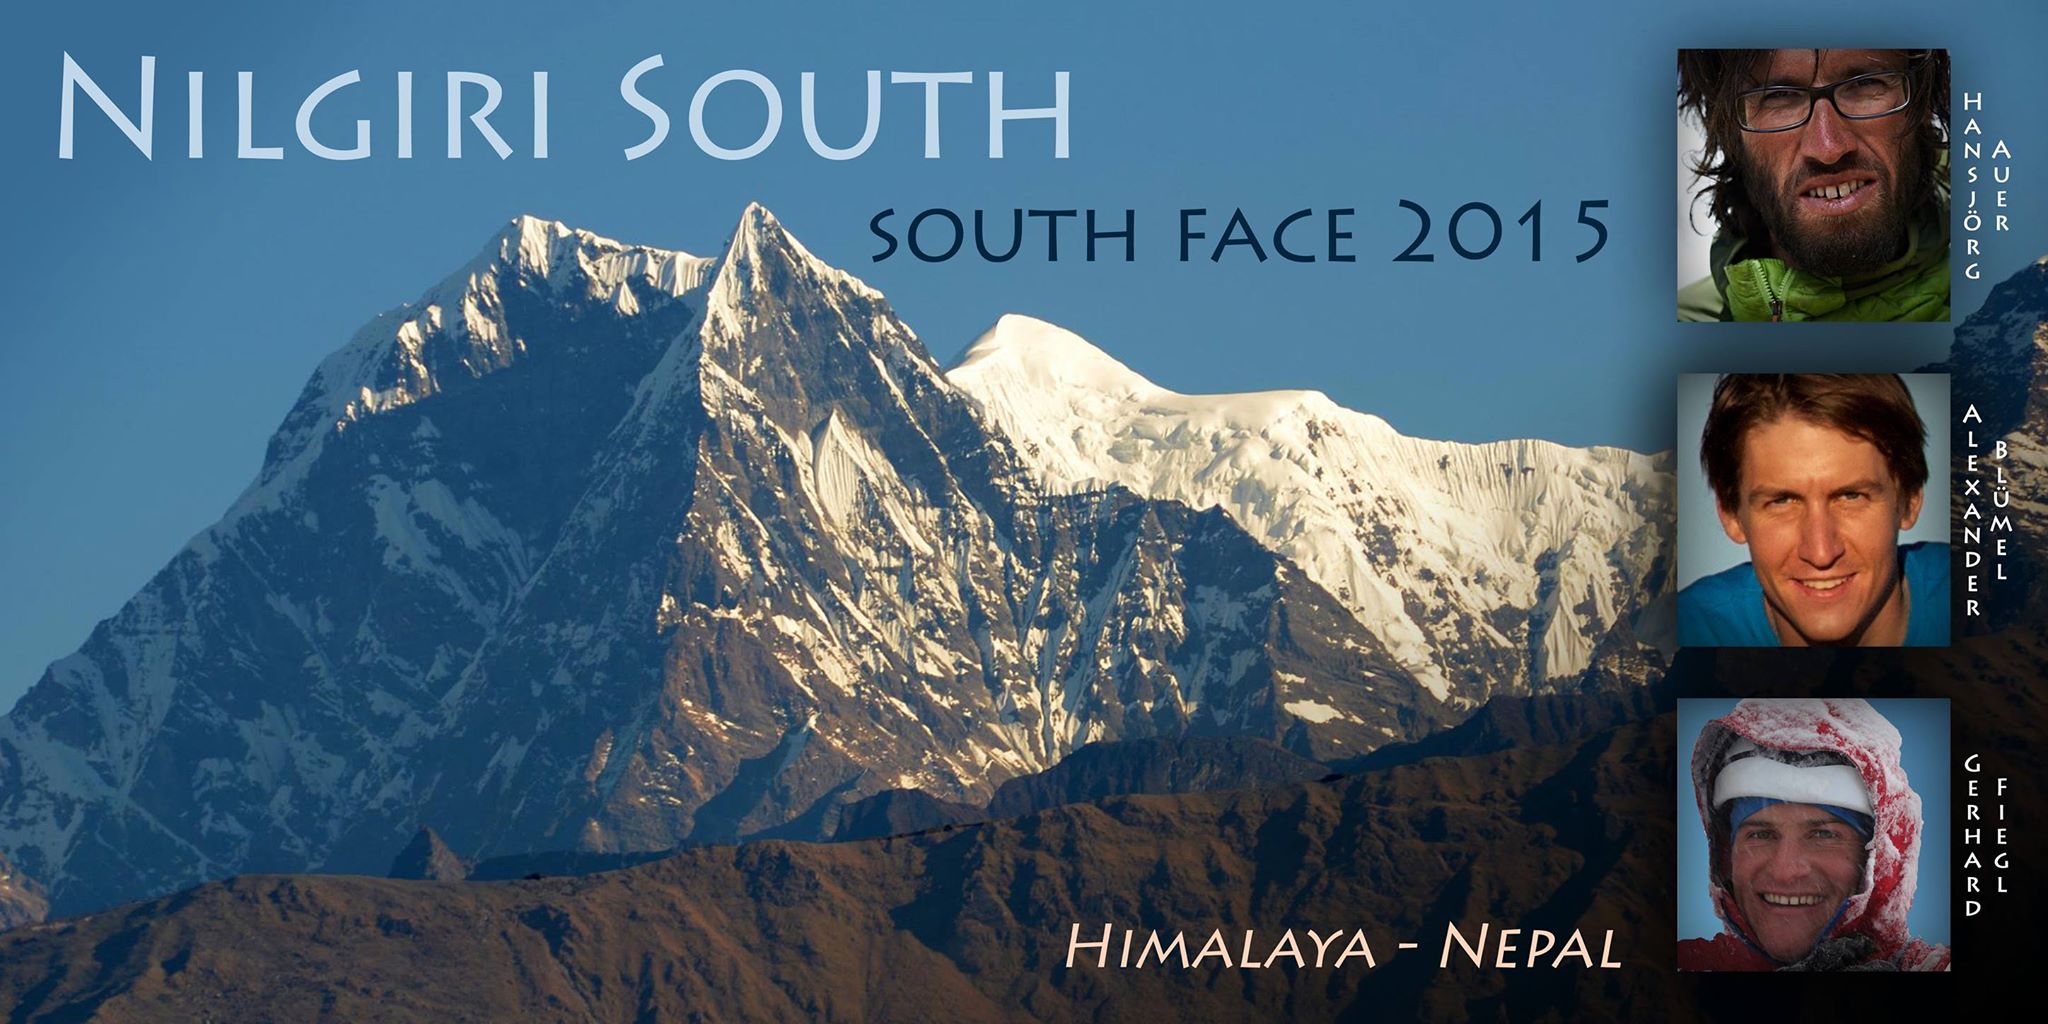 Austrian Expedition on South face of Nilgiri South